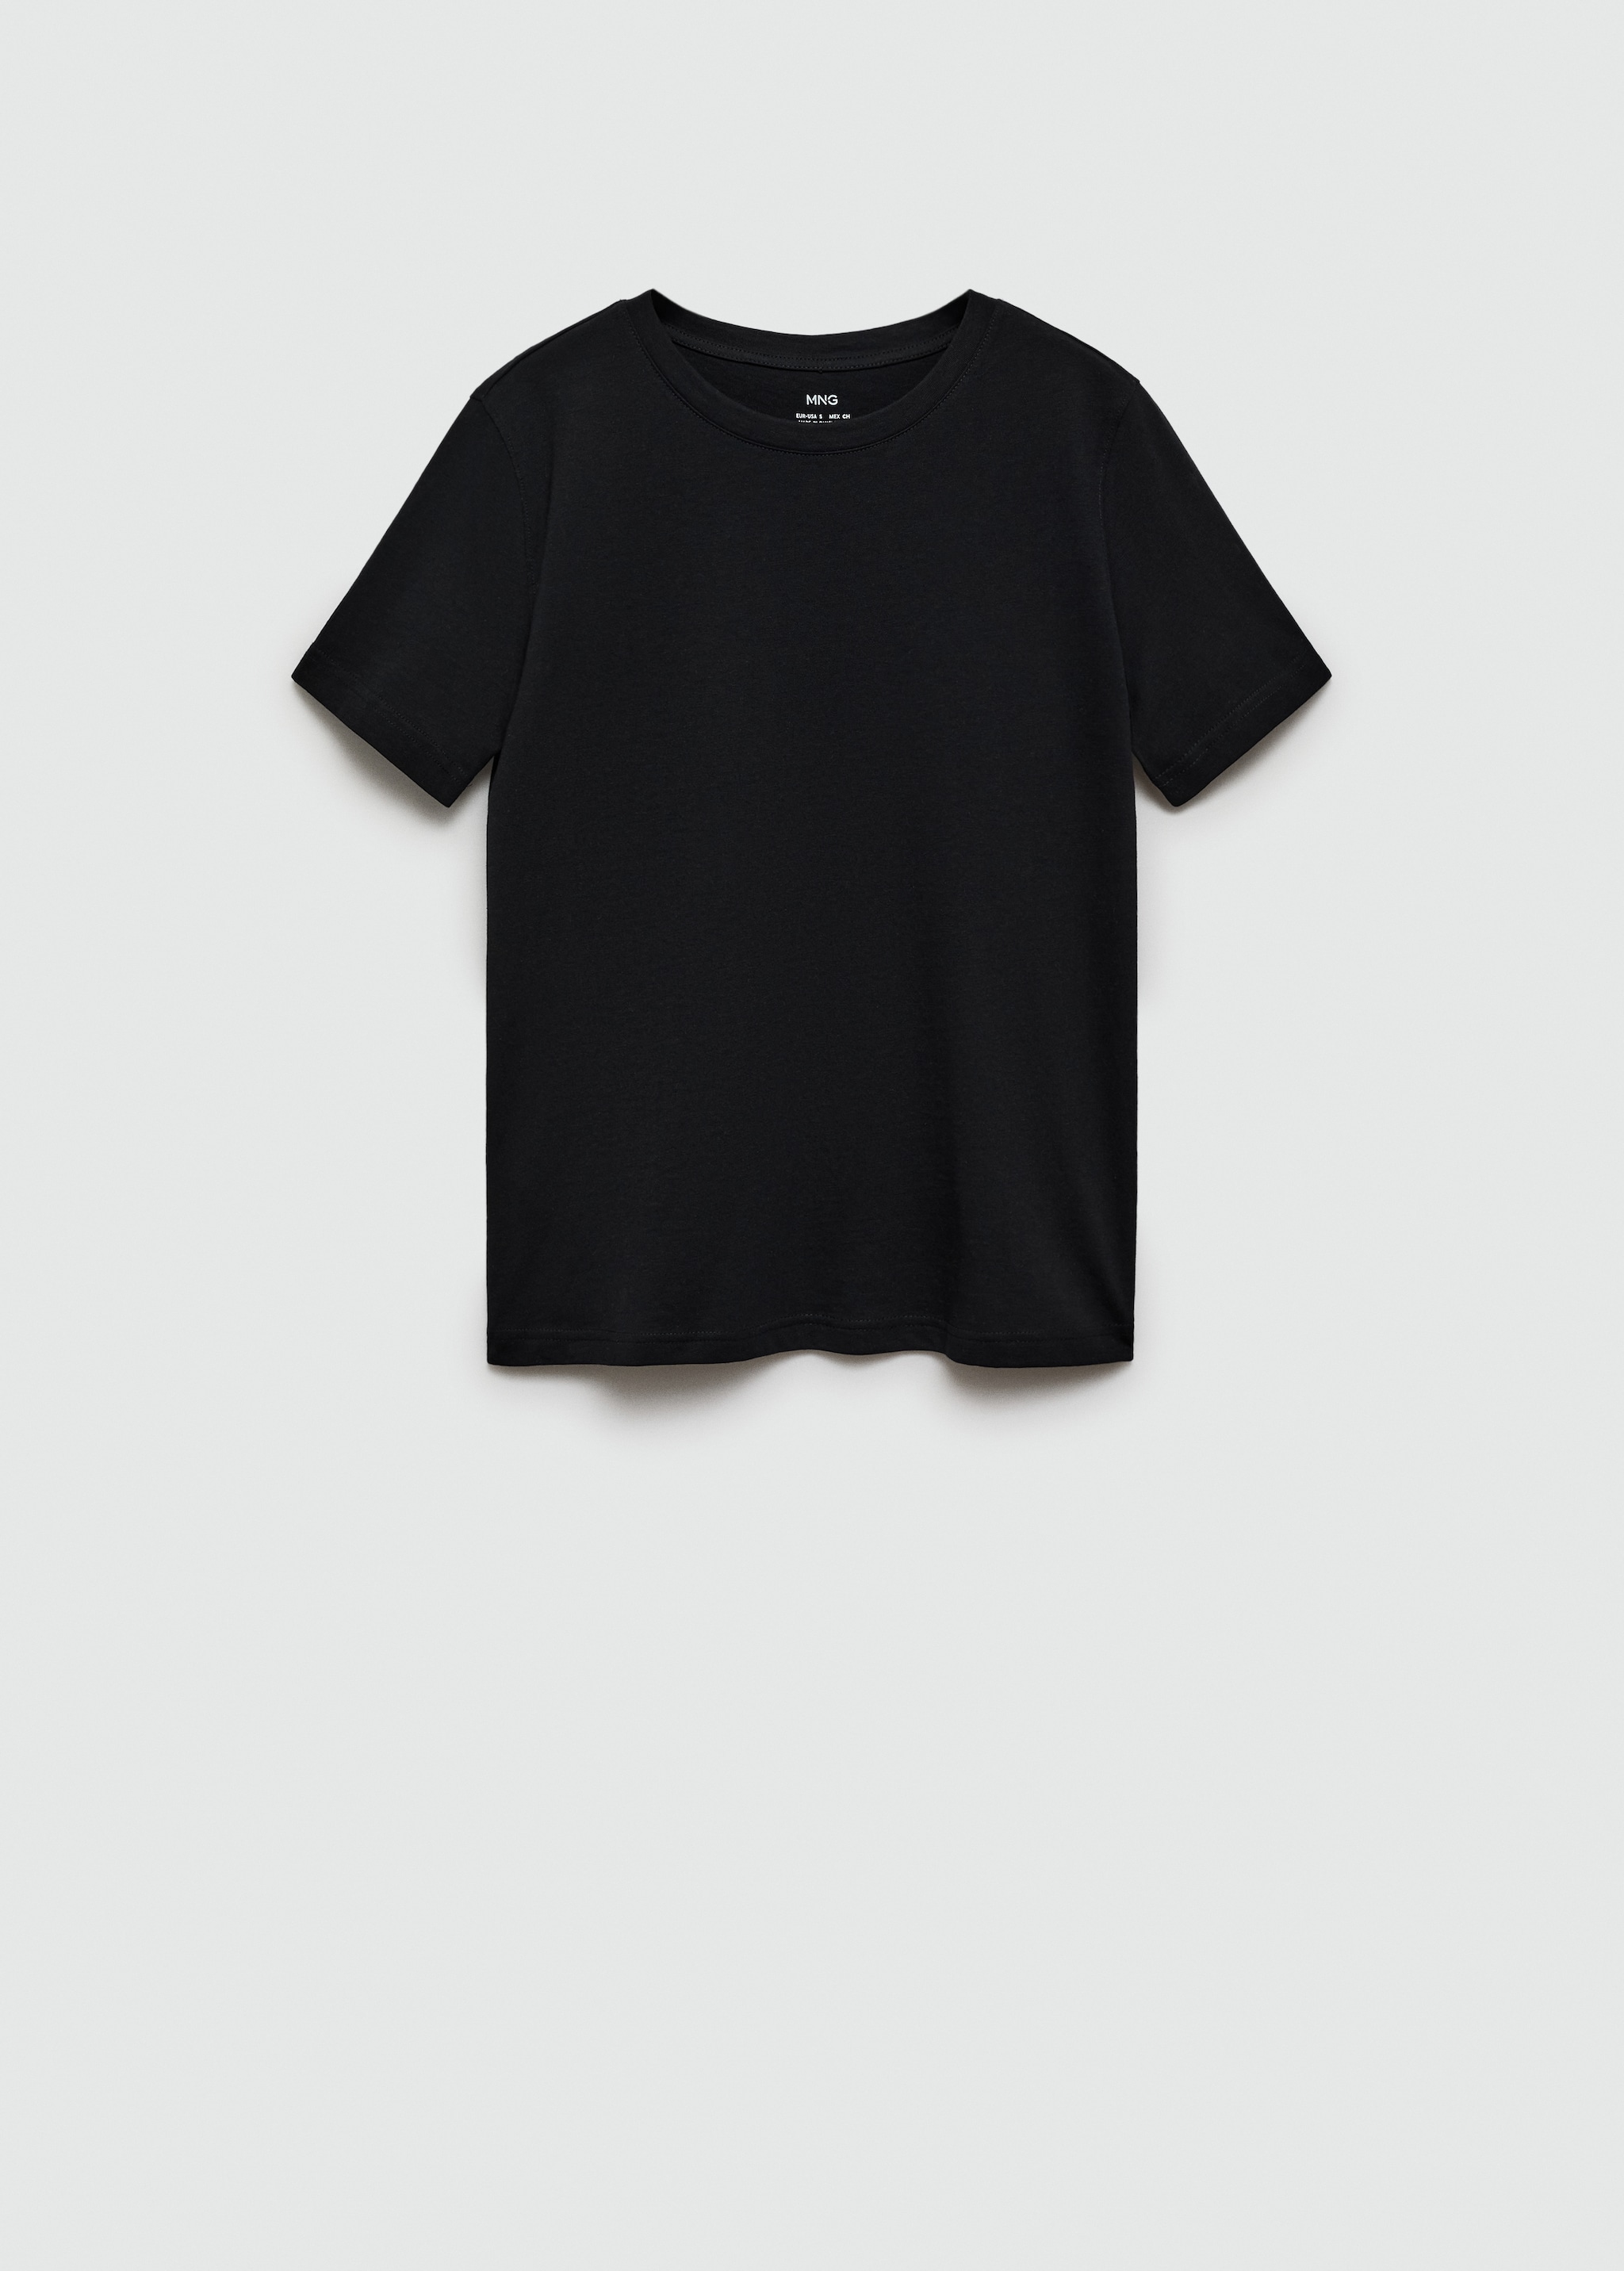 Camiseta algodón manga corta - Artículo sin modelo